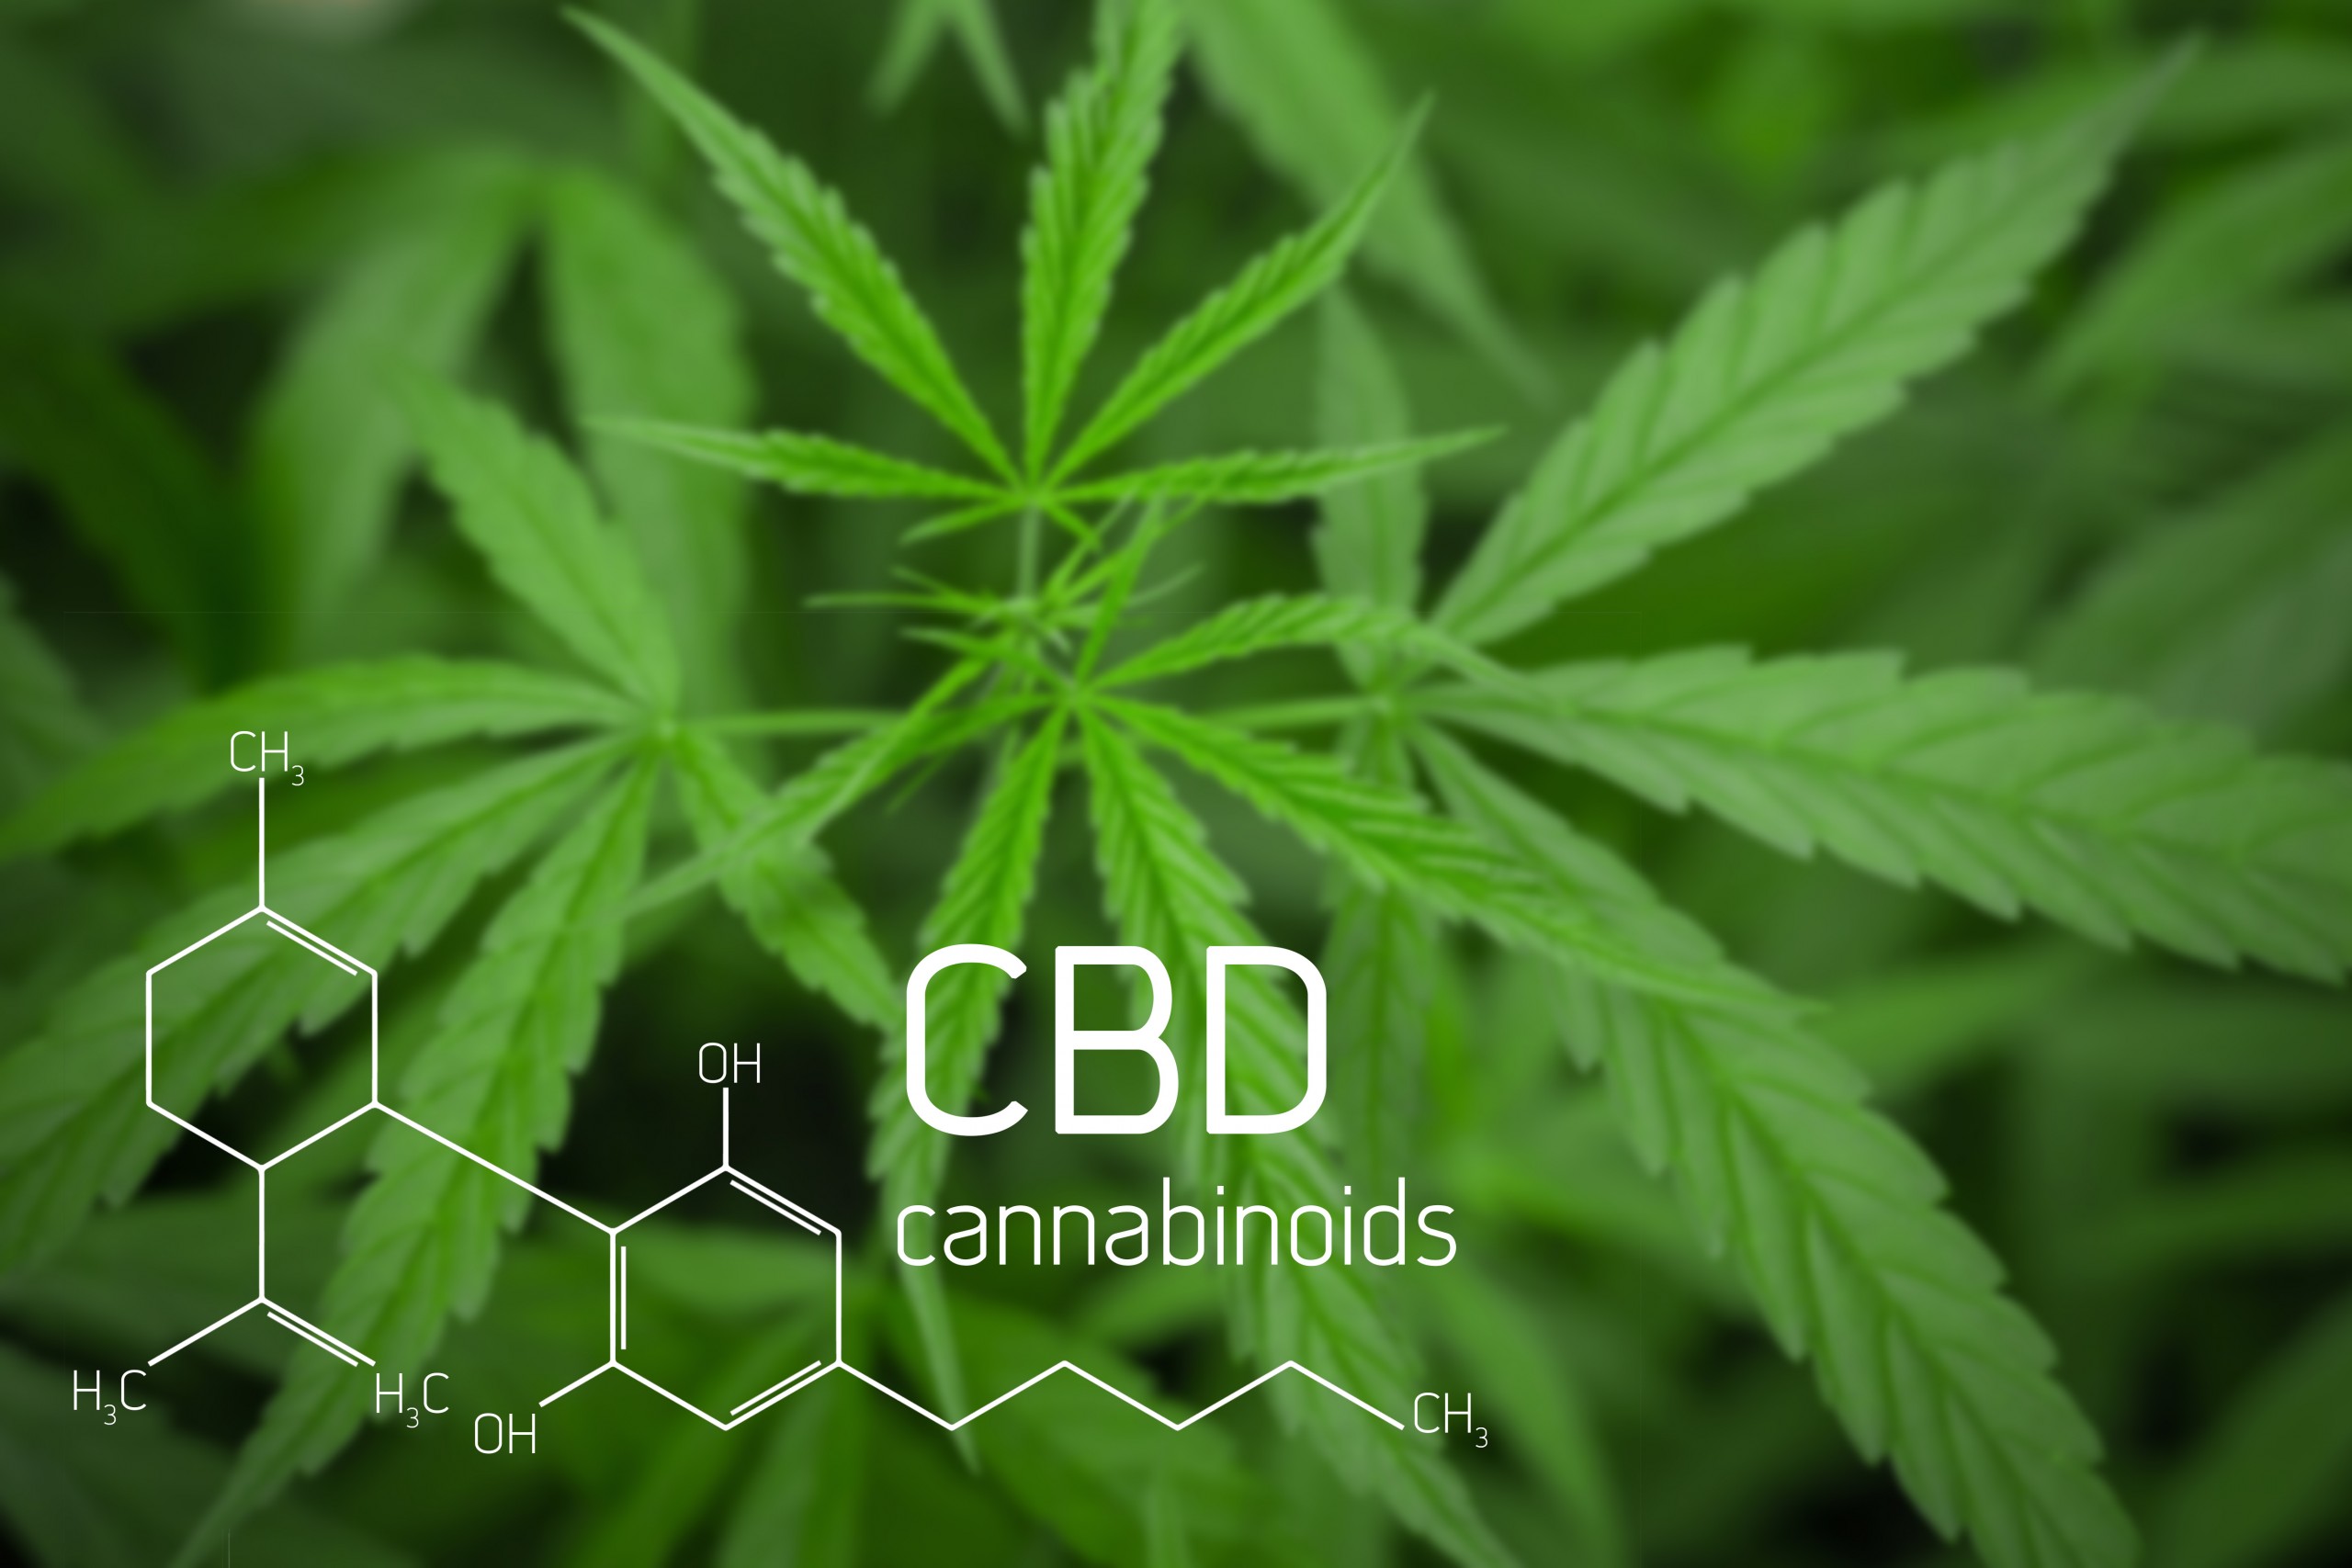 What is cannabinoid